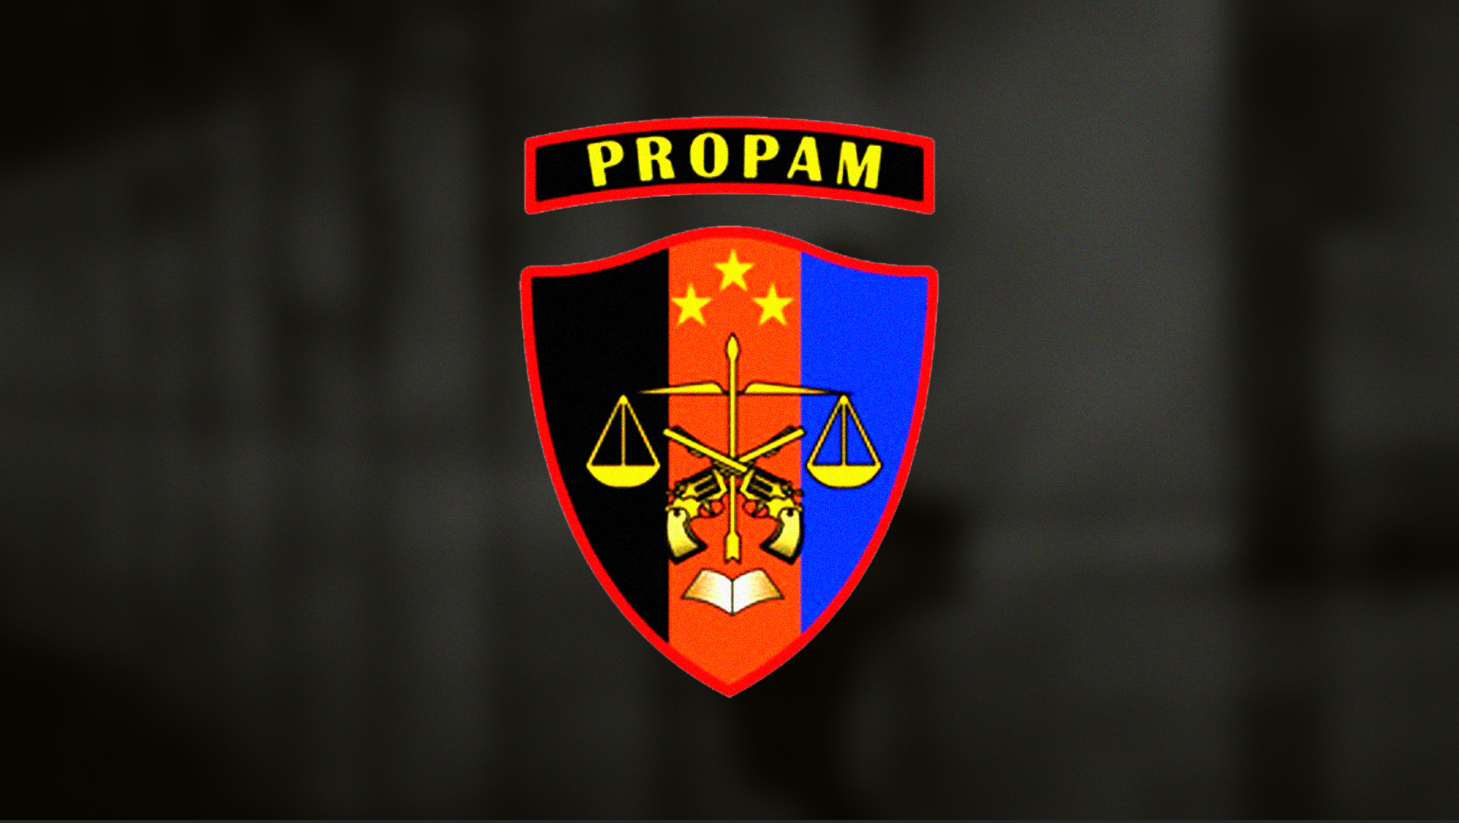 Empat anggota polisi dari Polrestabes Surabaya ditangkap Propam